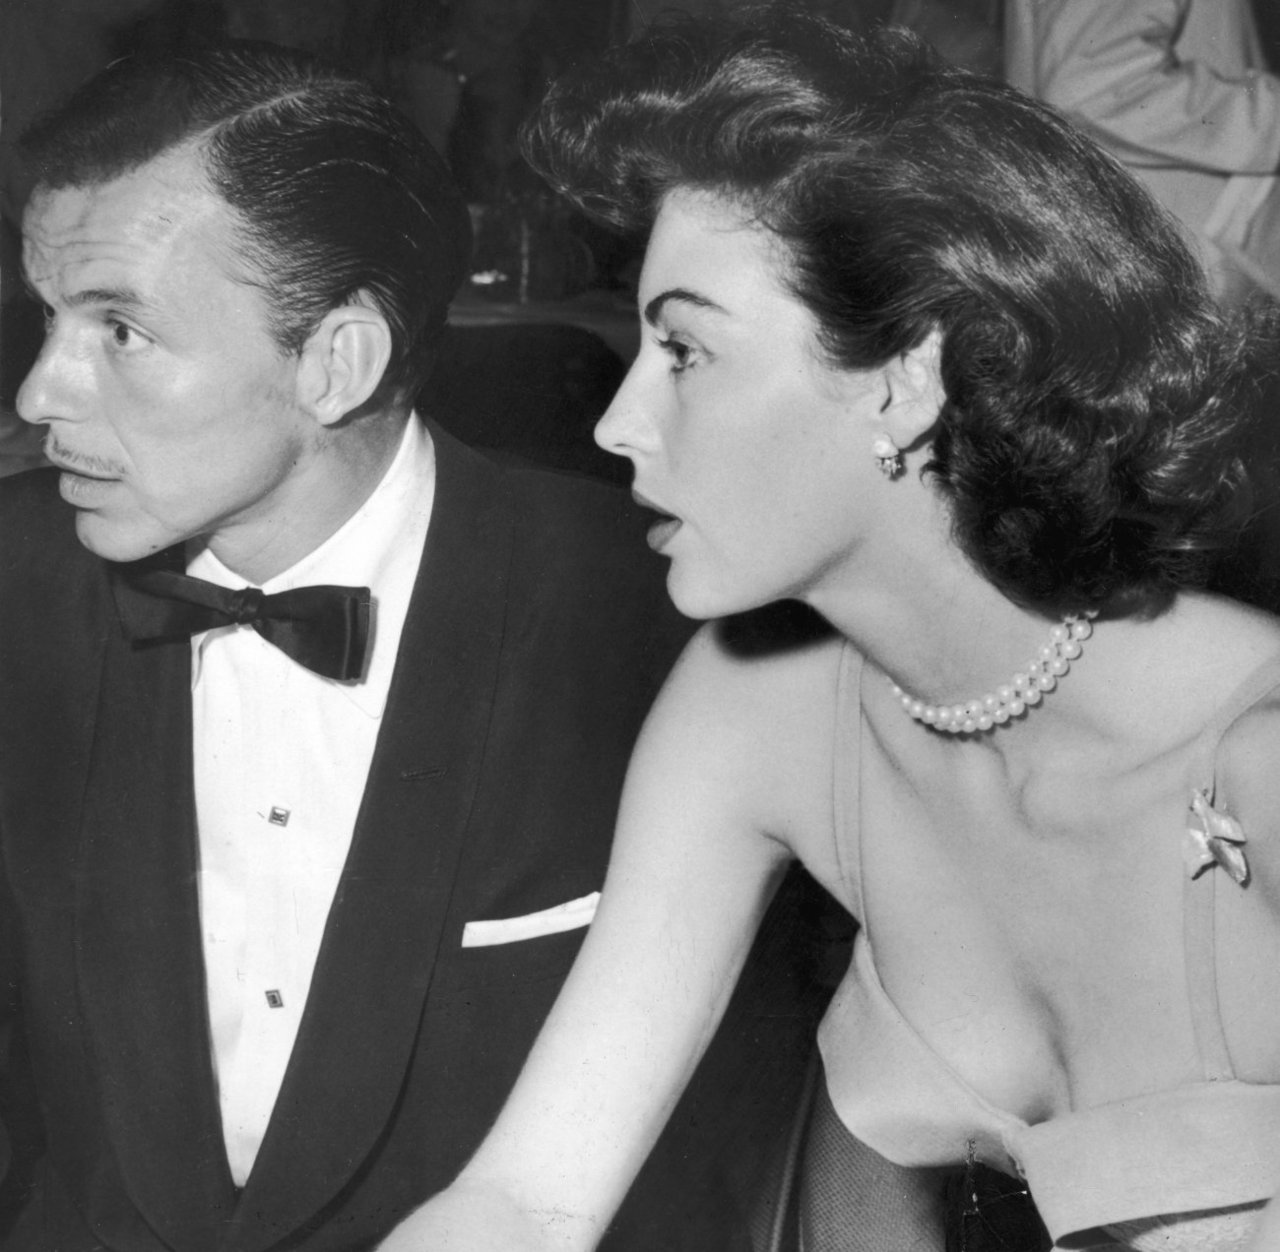 Frank Sinatra and Ava Gardner at the Flamingo, 1952.